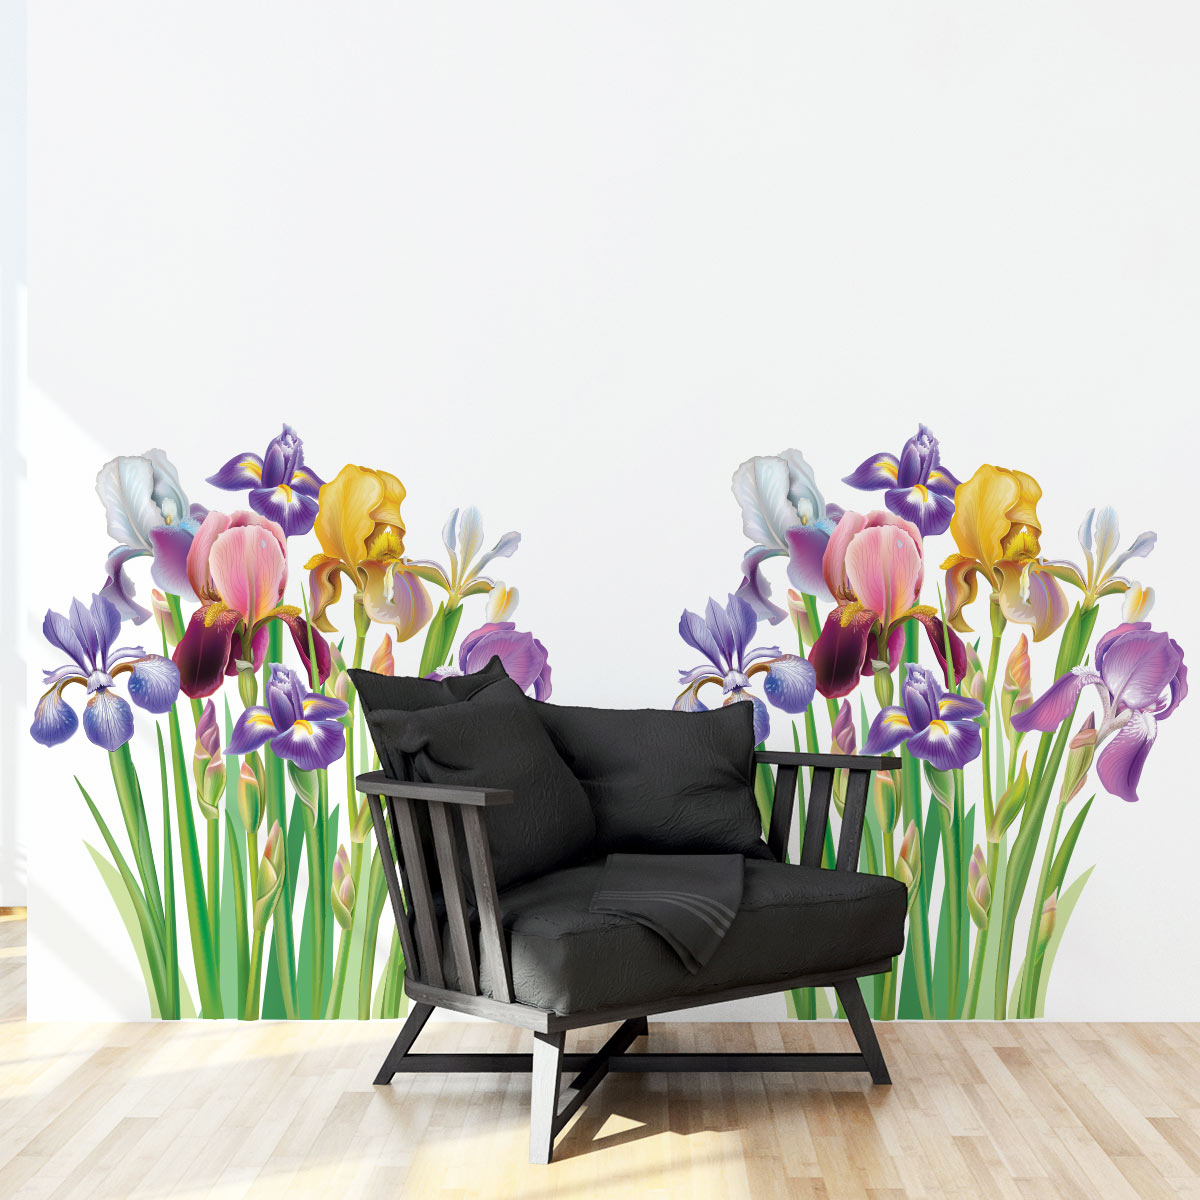 Sticker mural fleur iris mauve 